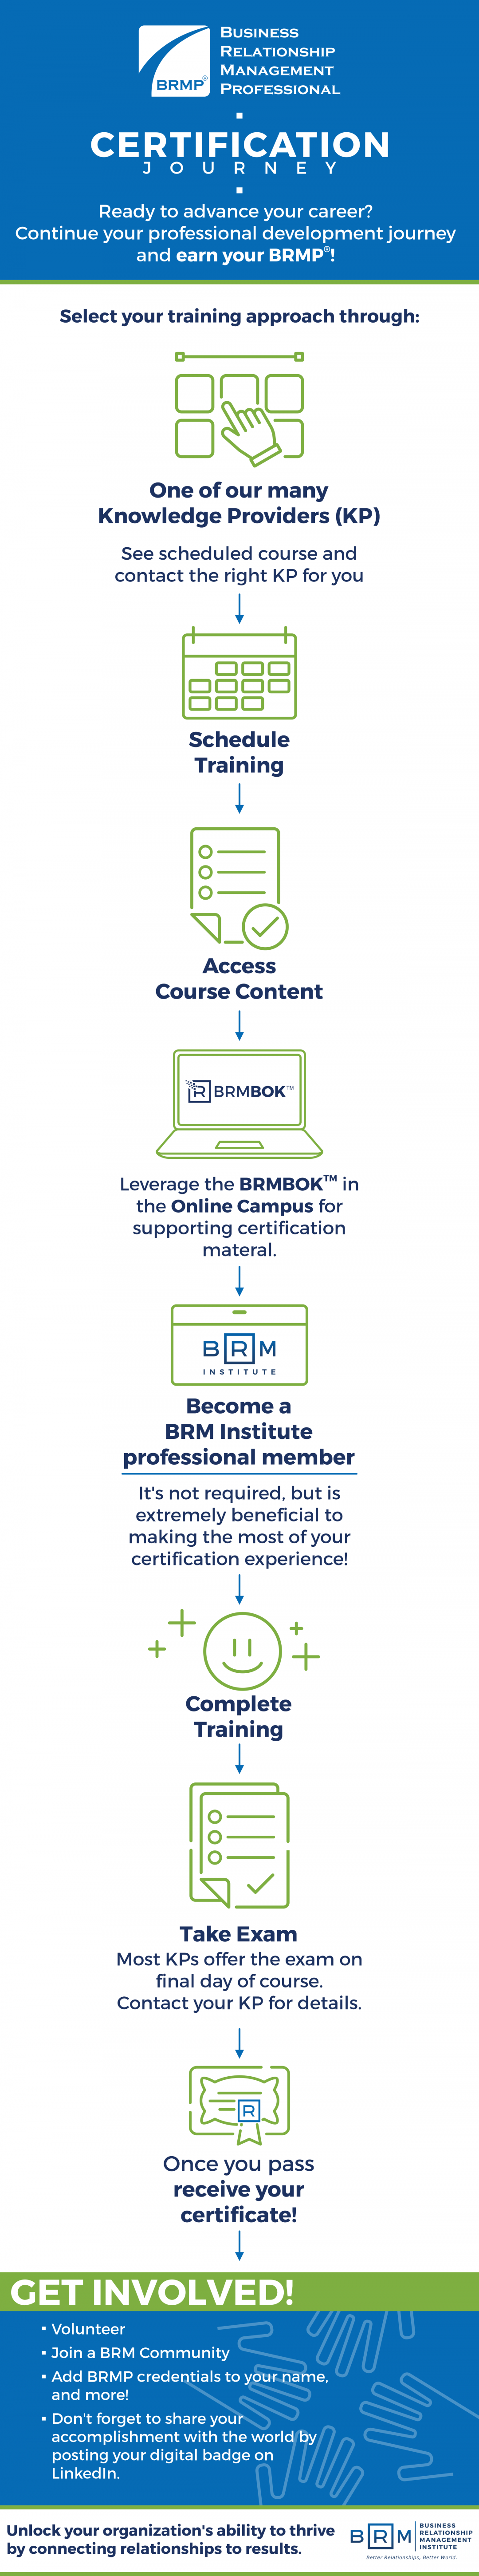 Why BRMP®? BRM Institute